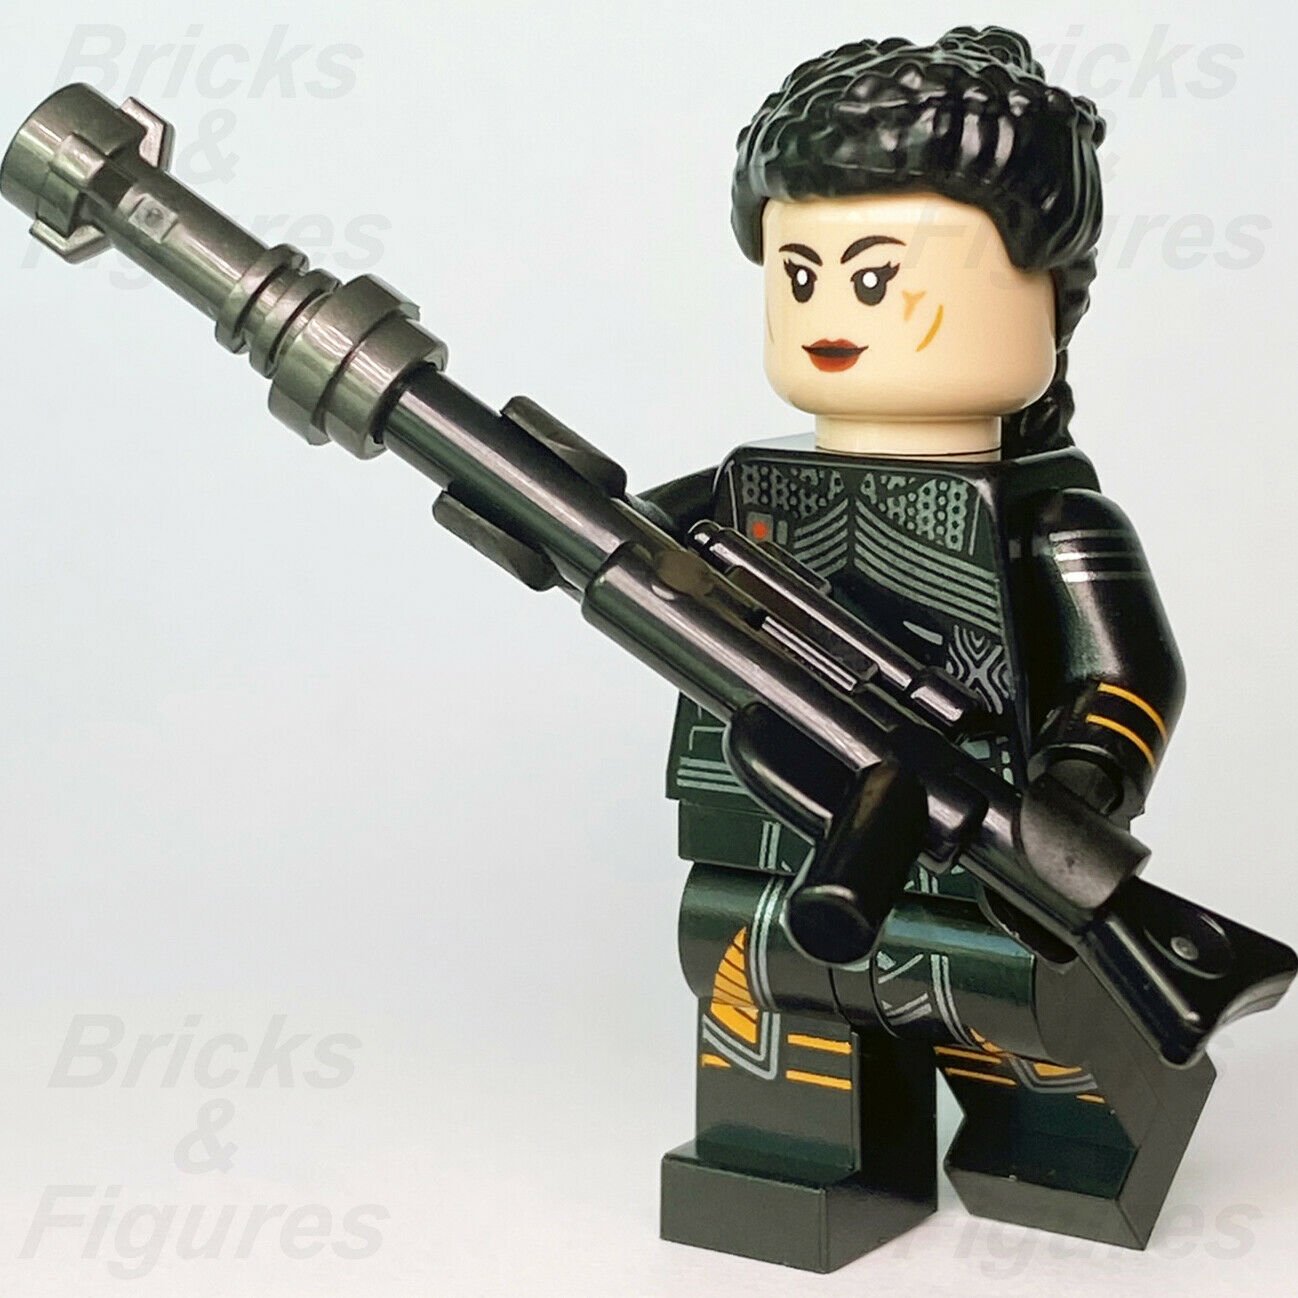 New Star Wars LEGO Fennec Shand The Book of Boba Fett Minifigure 75326 sw1192 - Bricks & Figures